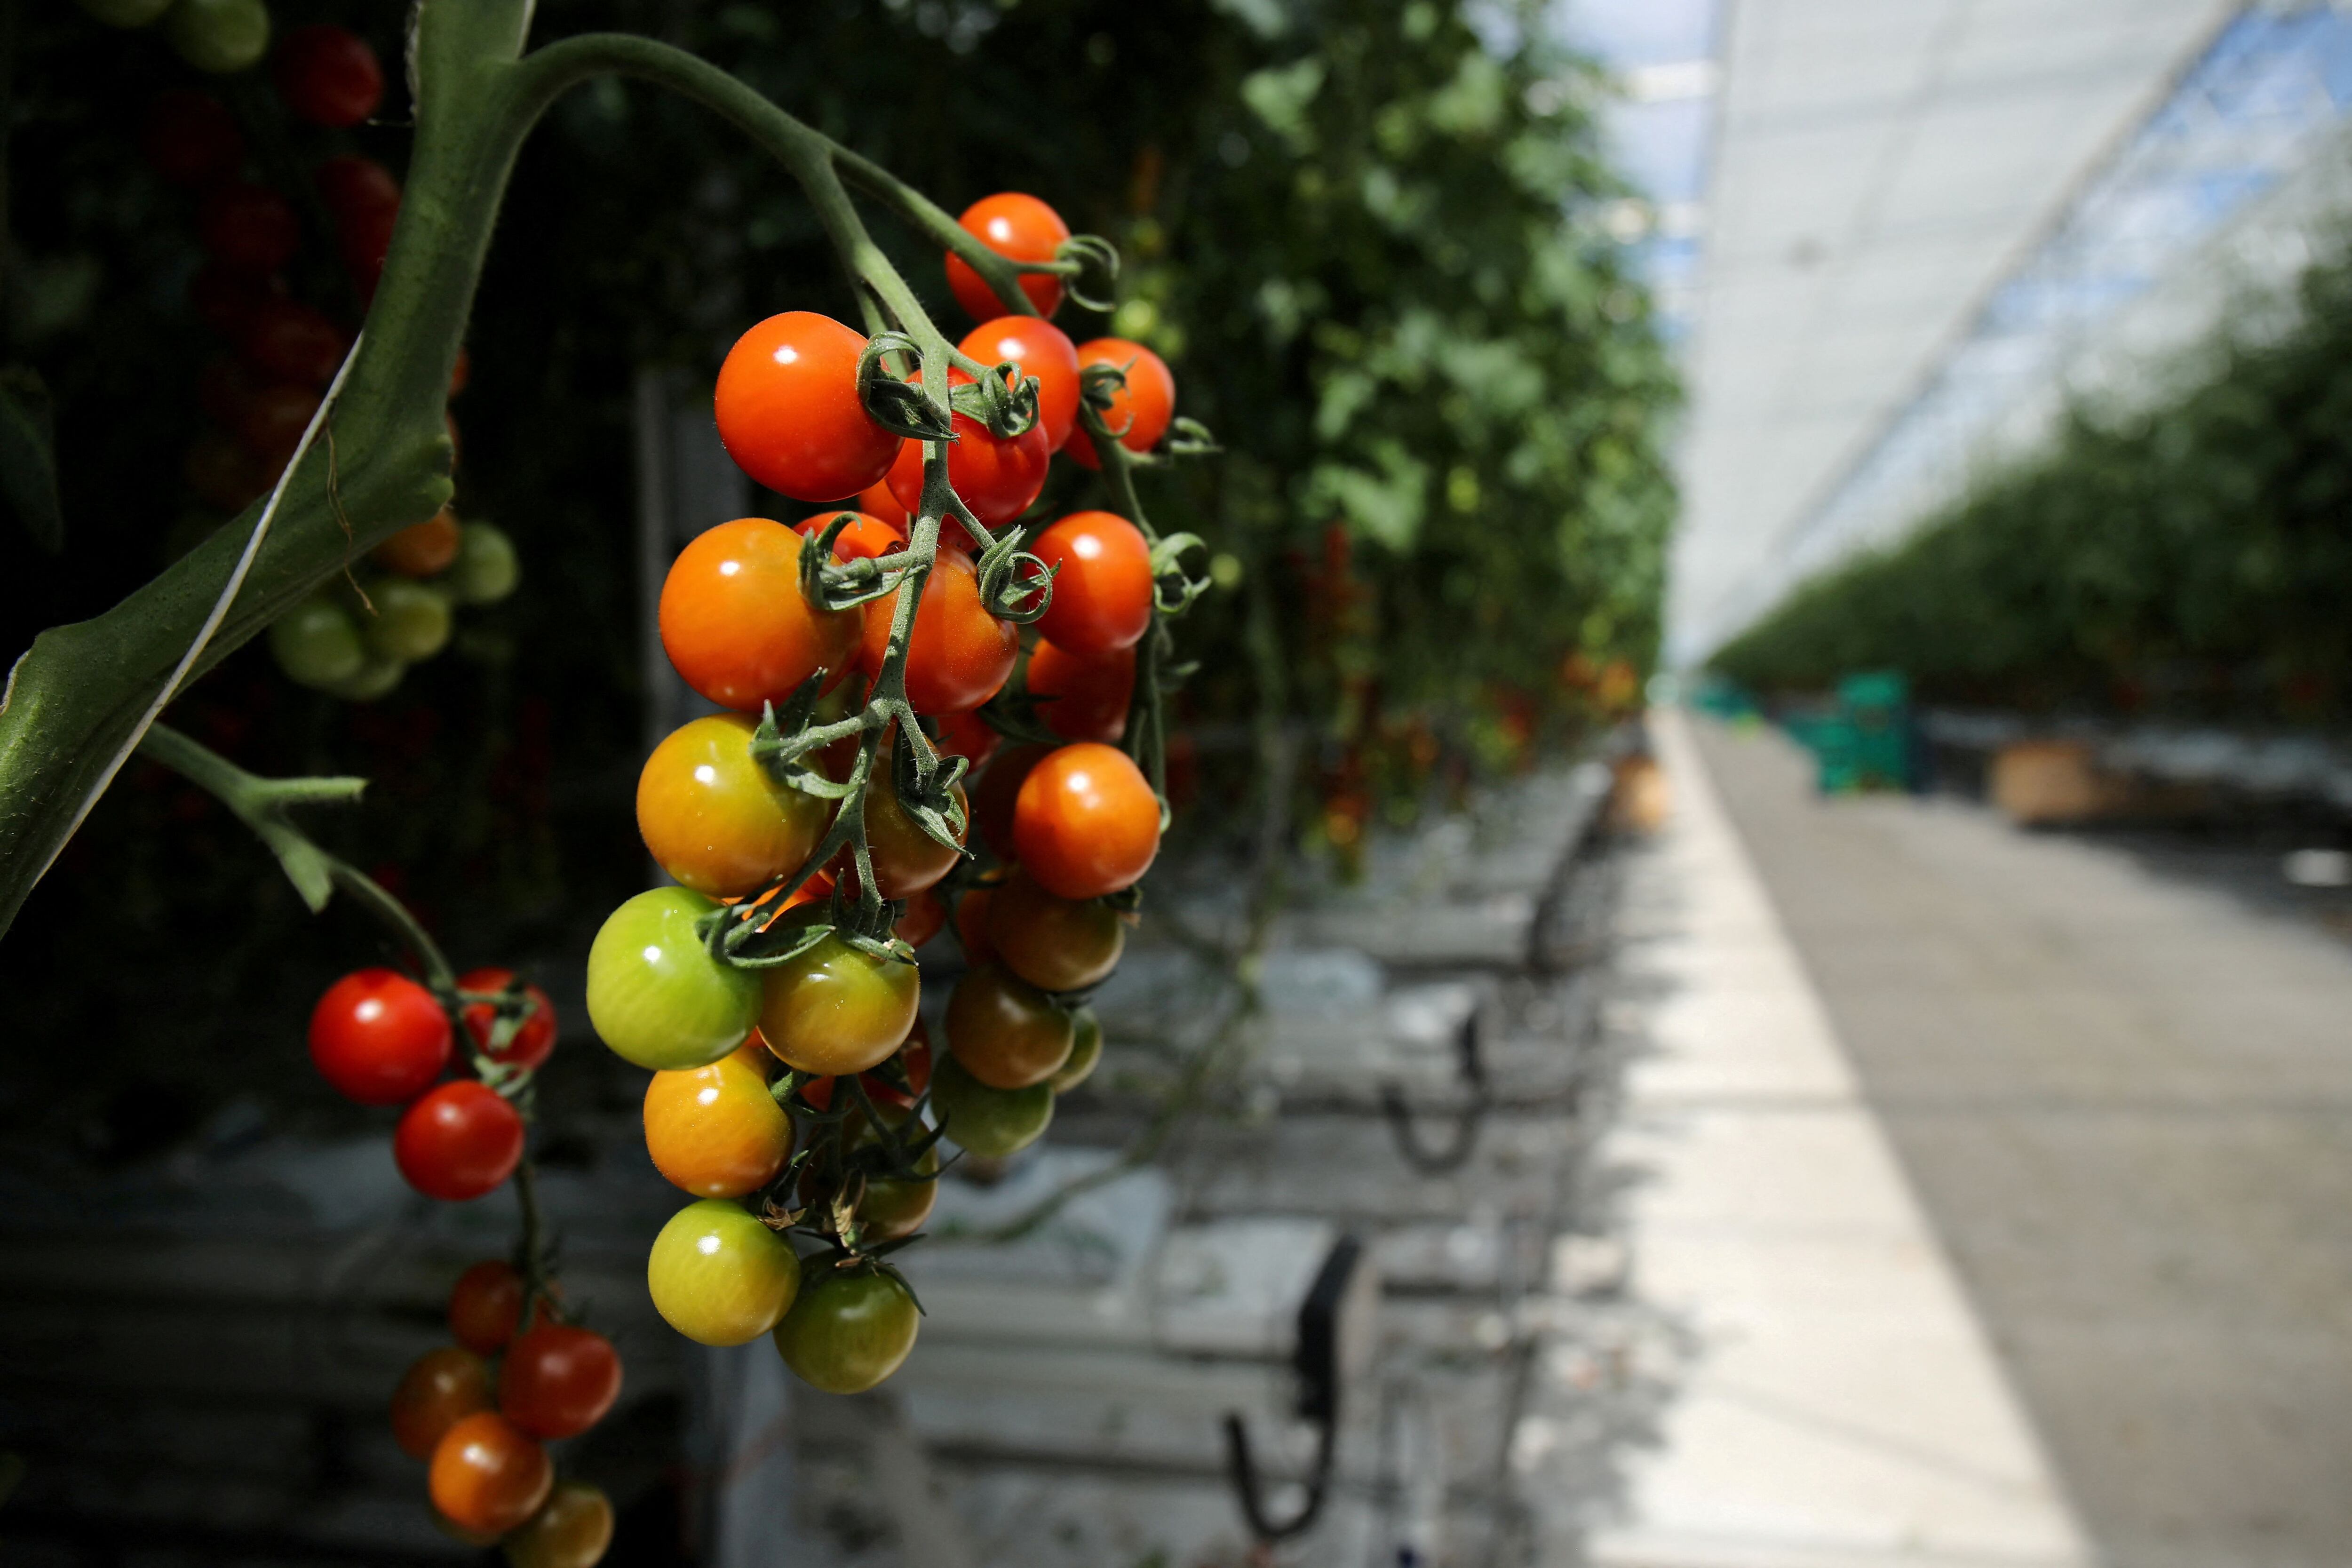 El Senasa declaró el alerta fitosanitaria por el virus rugoso del tomate (REUTERS)